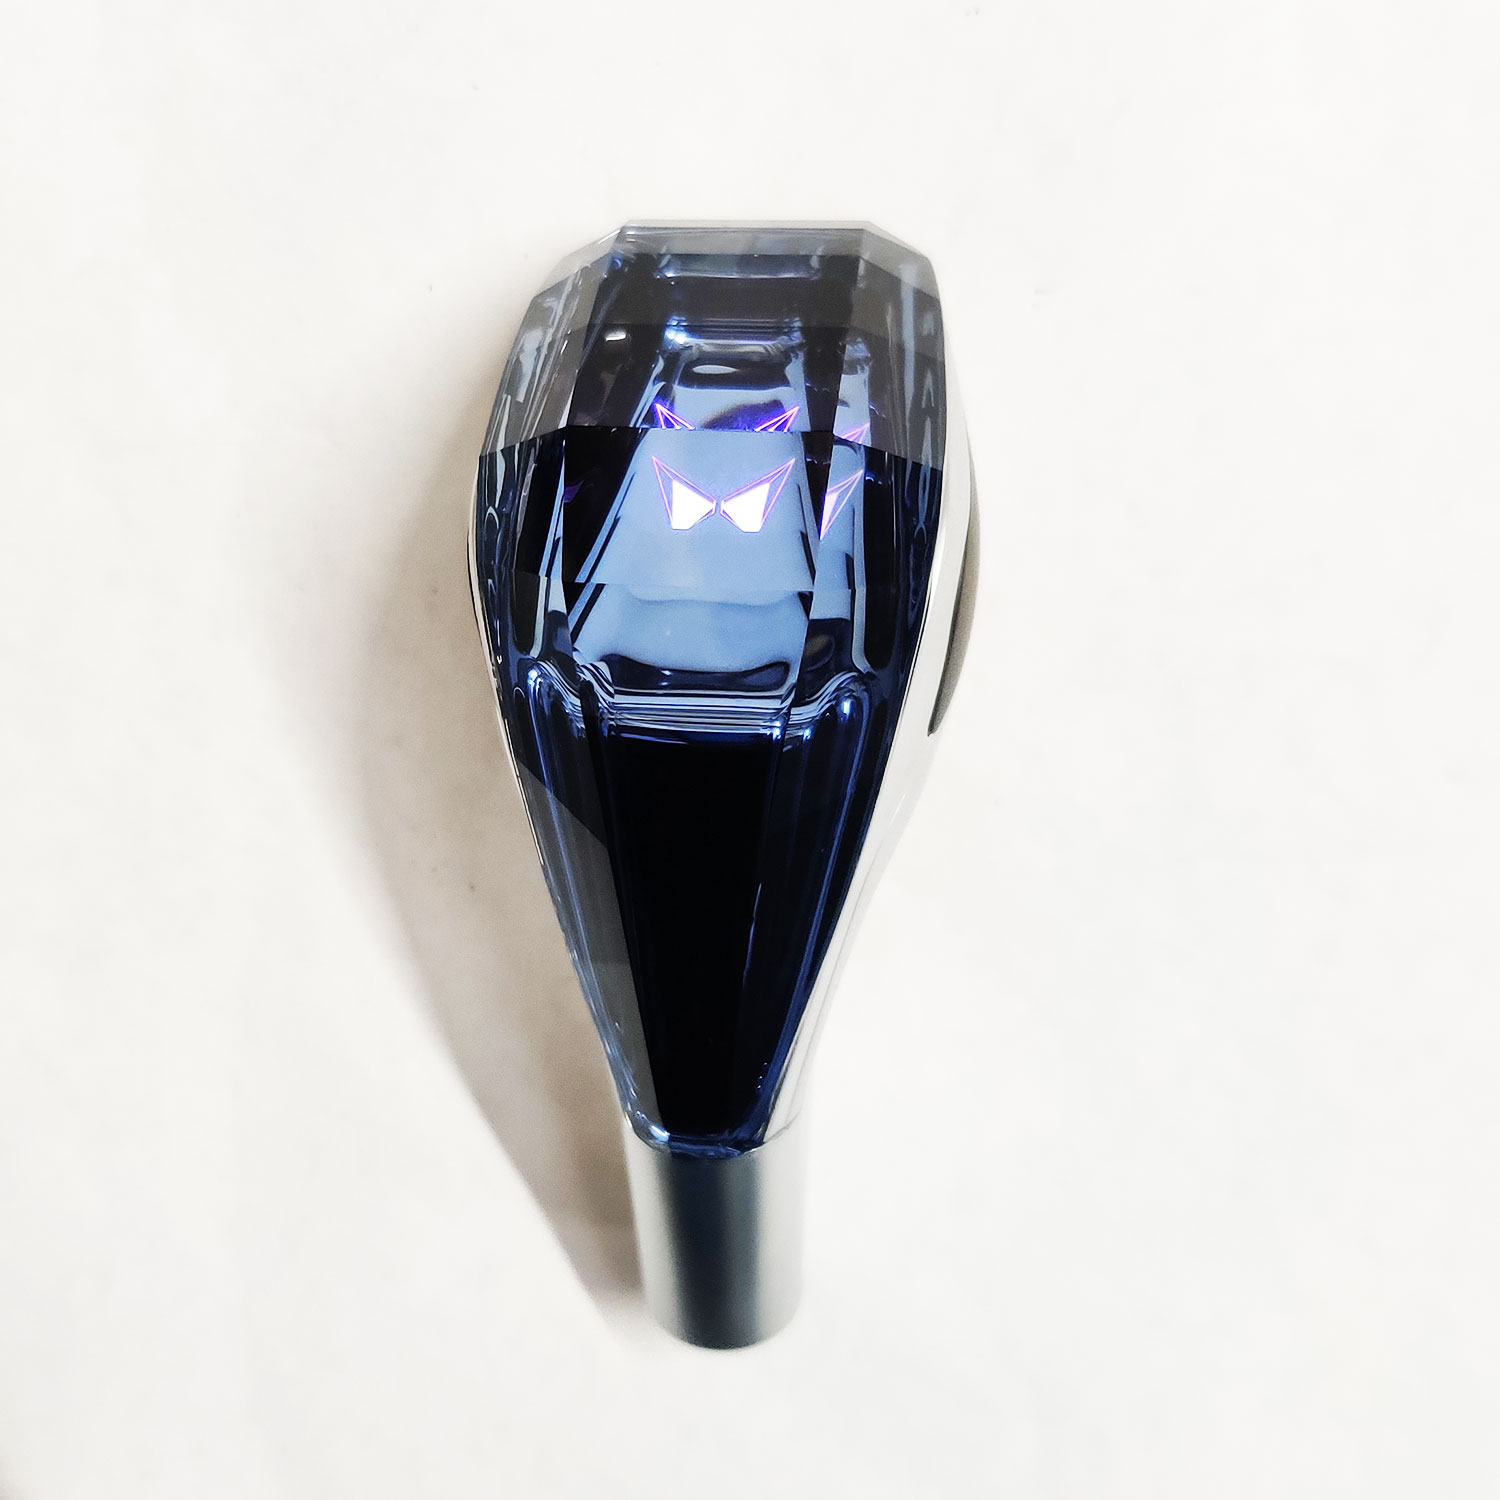 Crystal Gear Shift Knob With LED Lights For Mahindra Cars